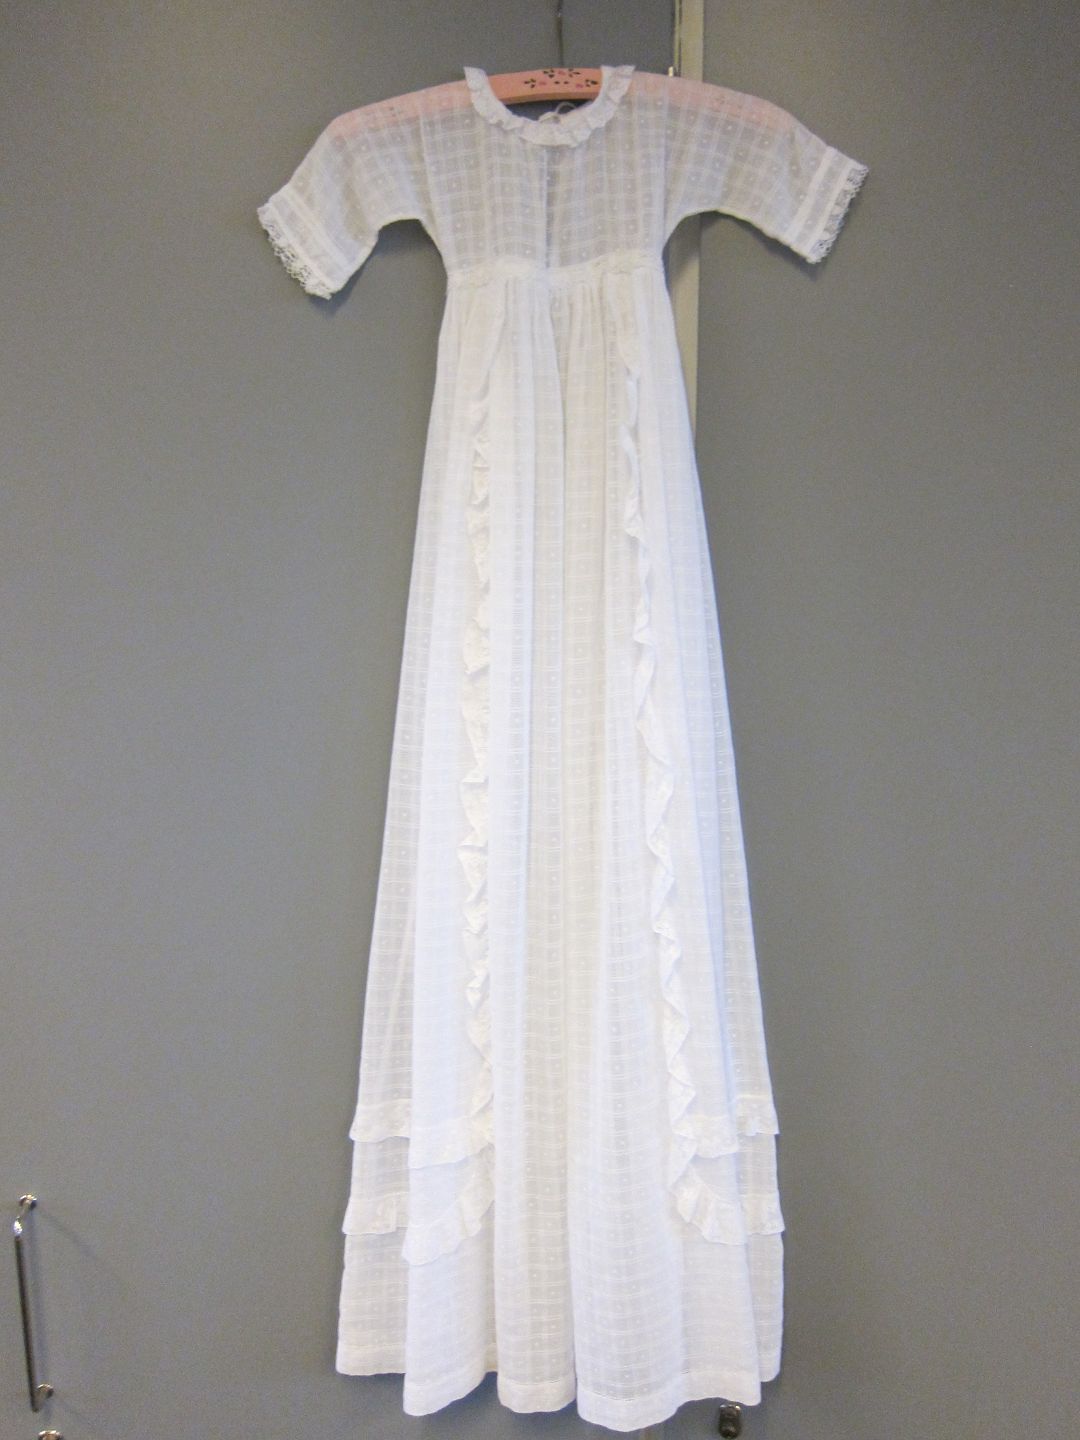 ViKaLi - underskørt * Gammel, meget smuk dåbskjole med underskørt pyntet